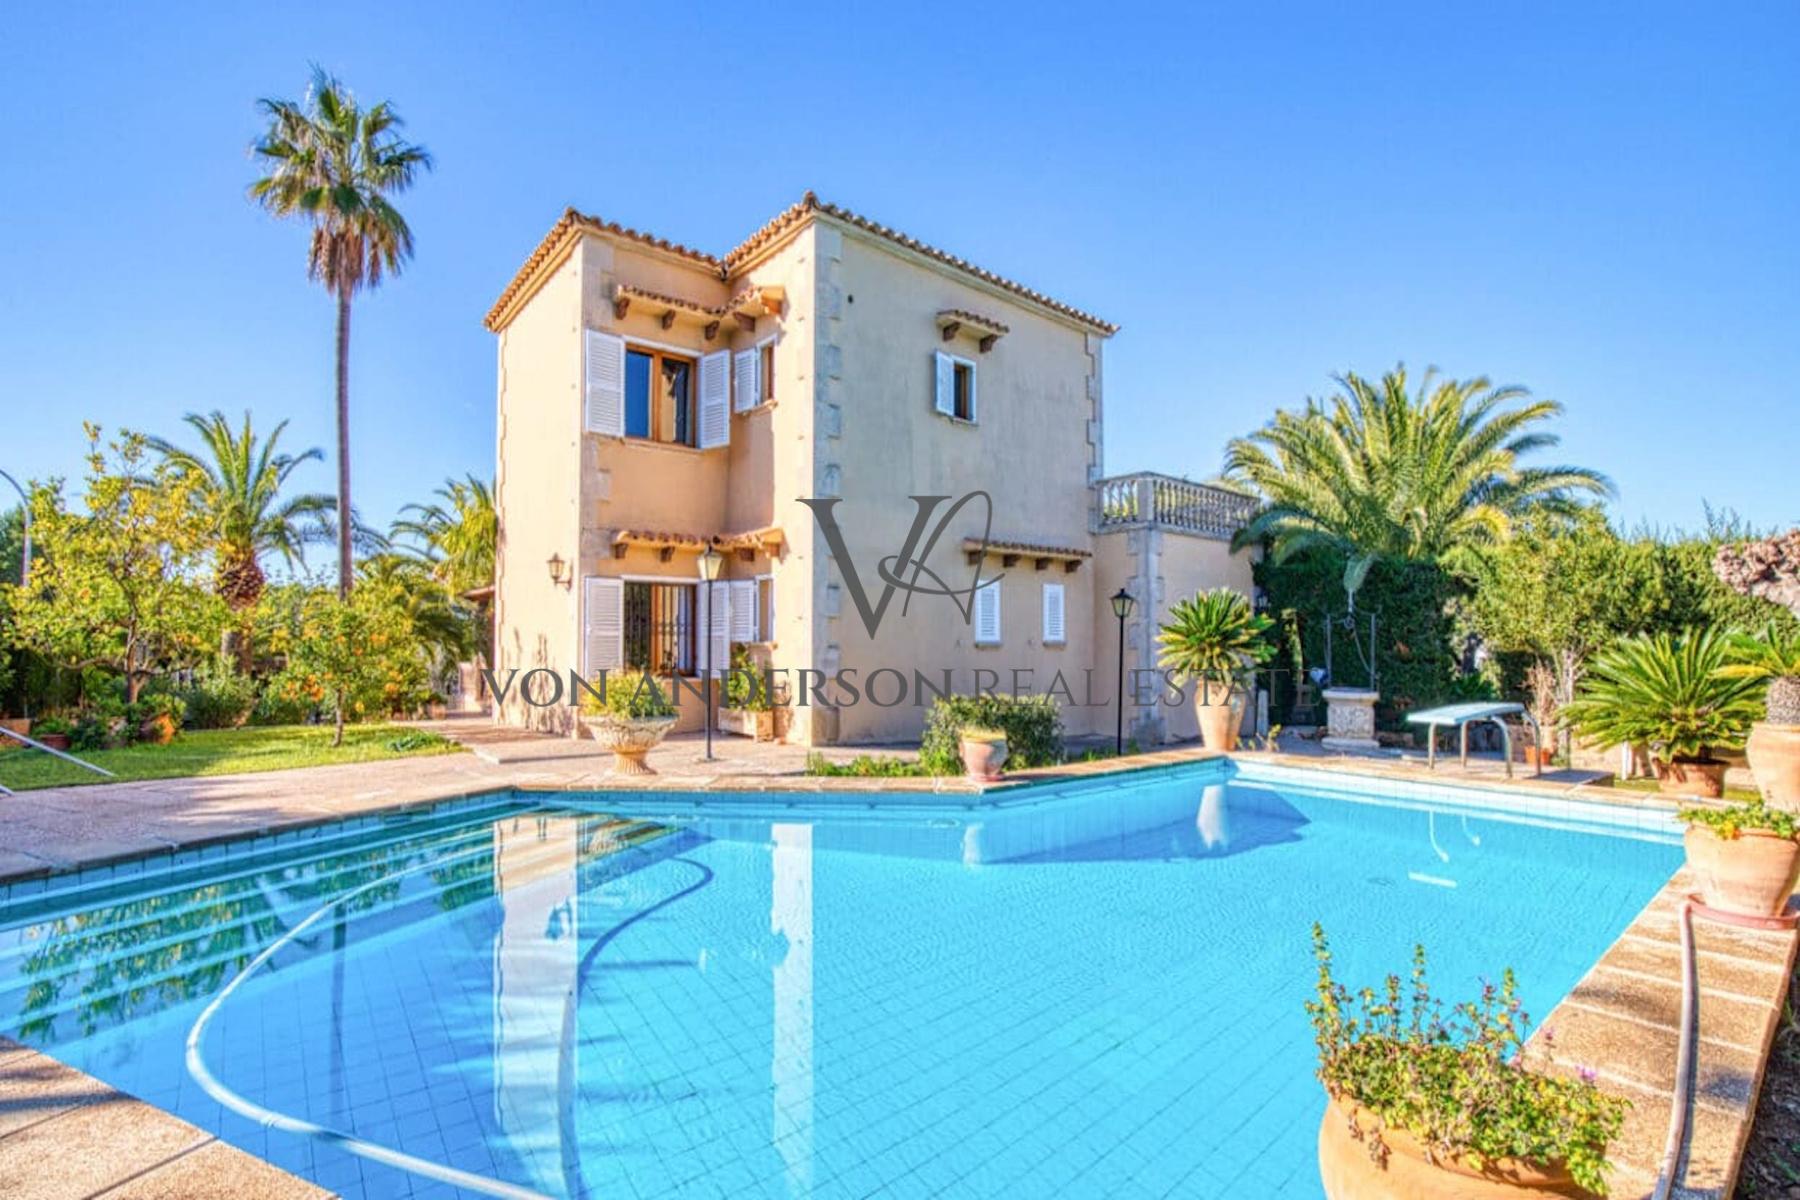 Generously Sized Villa Featuring a Pool, Terraces and Gardens in Santa Ponça, ref. VA1020, for sale in Mallorca by Von Anderson Real Estate